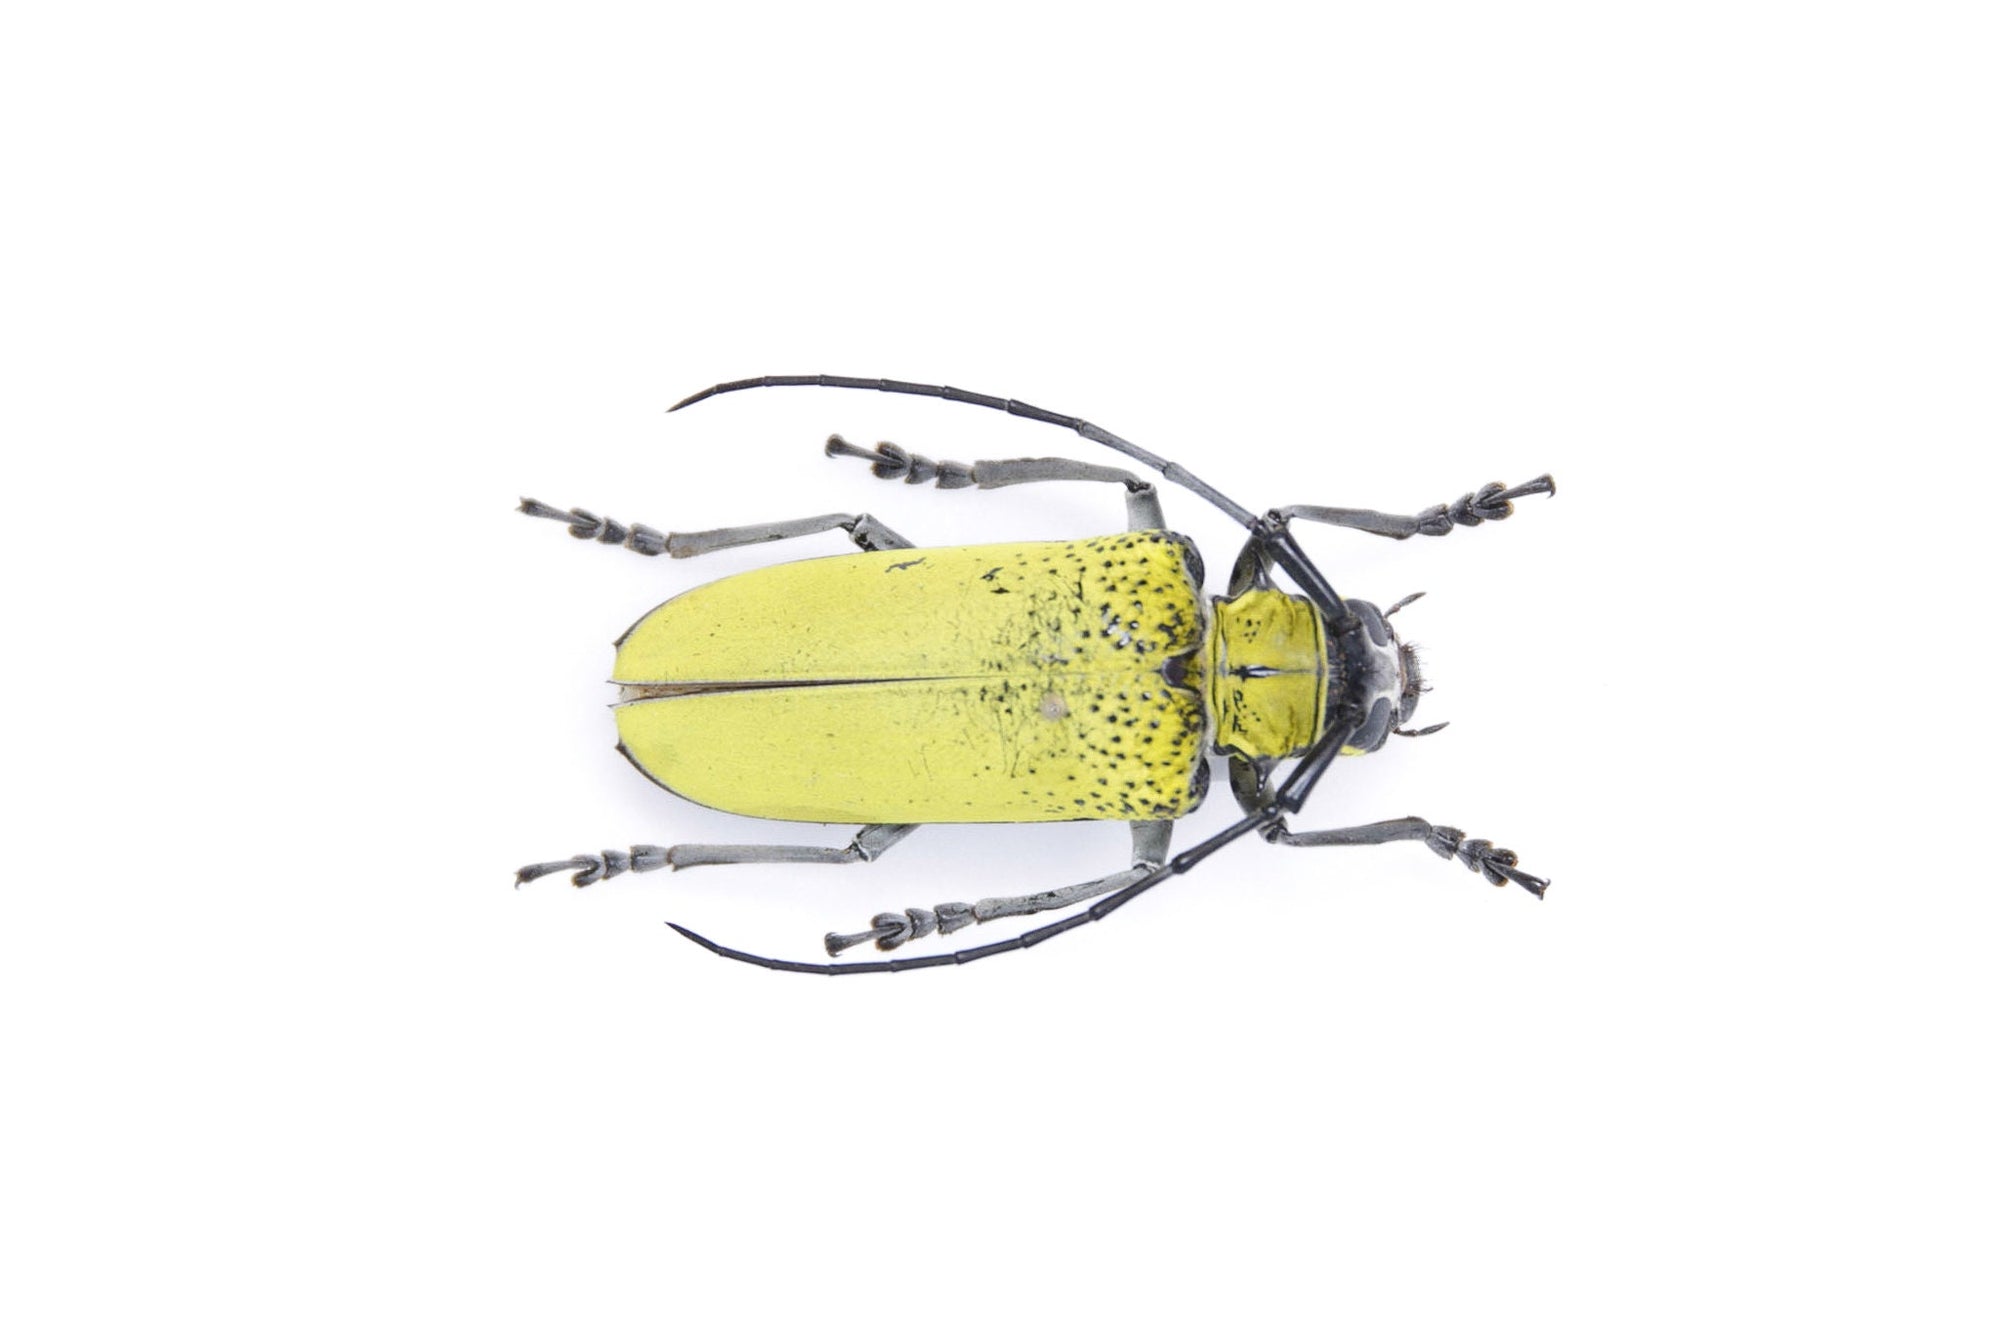 Celosterna pollinosa 43.7mm, A1 Real Beetle Pinned Set Specimen, Entomology Taxidermy #OC31